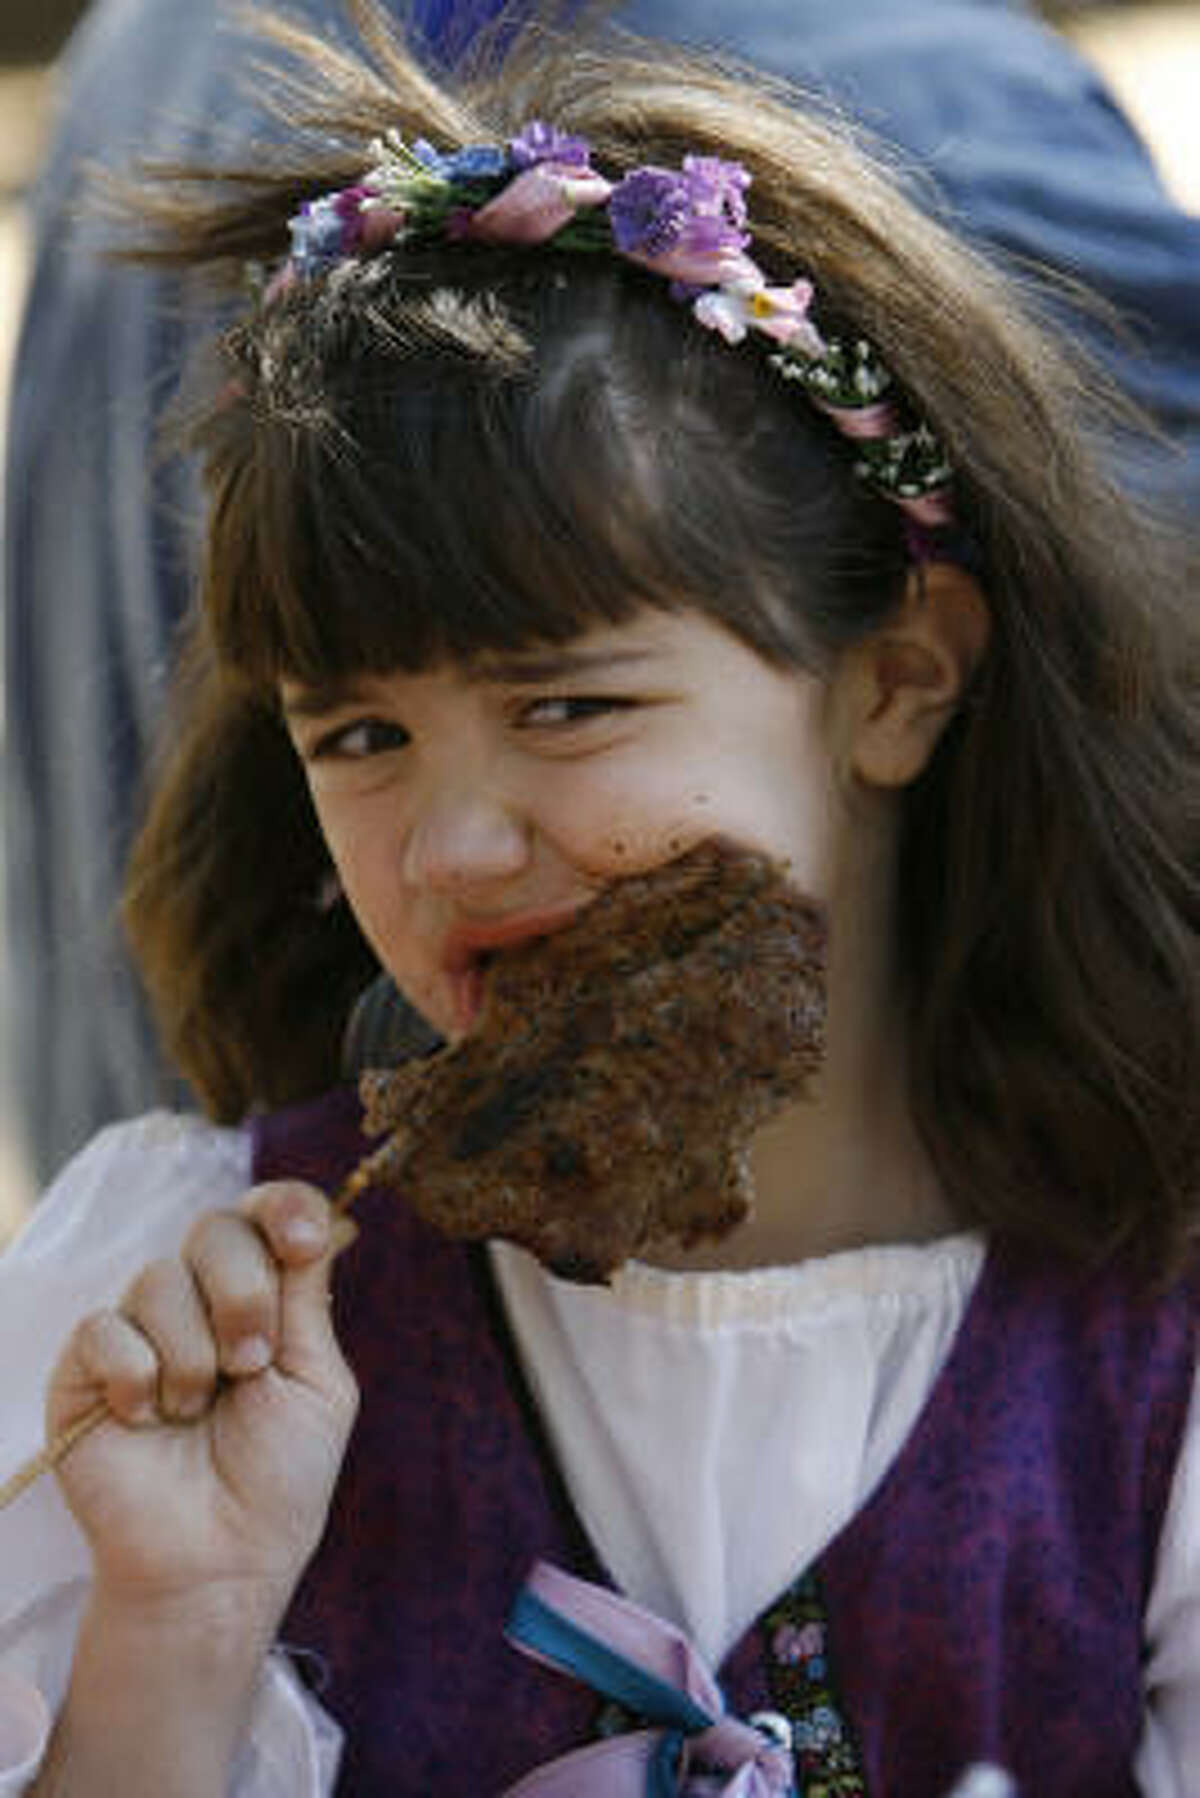 Regina Andrews, 7, of Missouri City enjoys a steak-on-a-stick during the Texas Renaissance Festival in Plantersville.